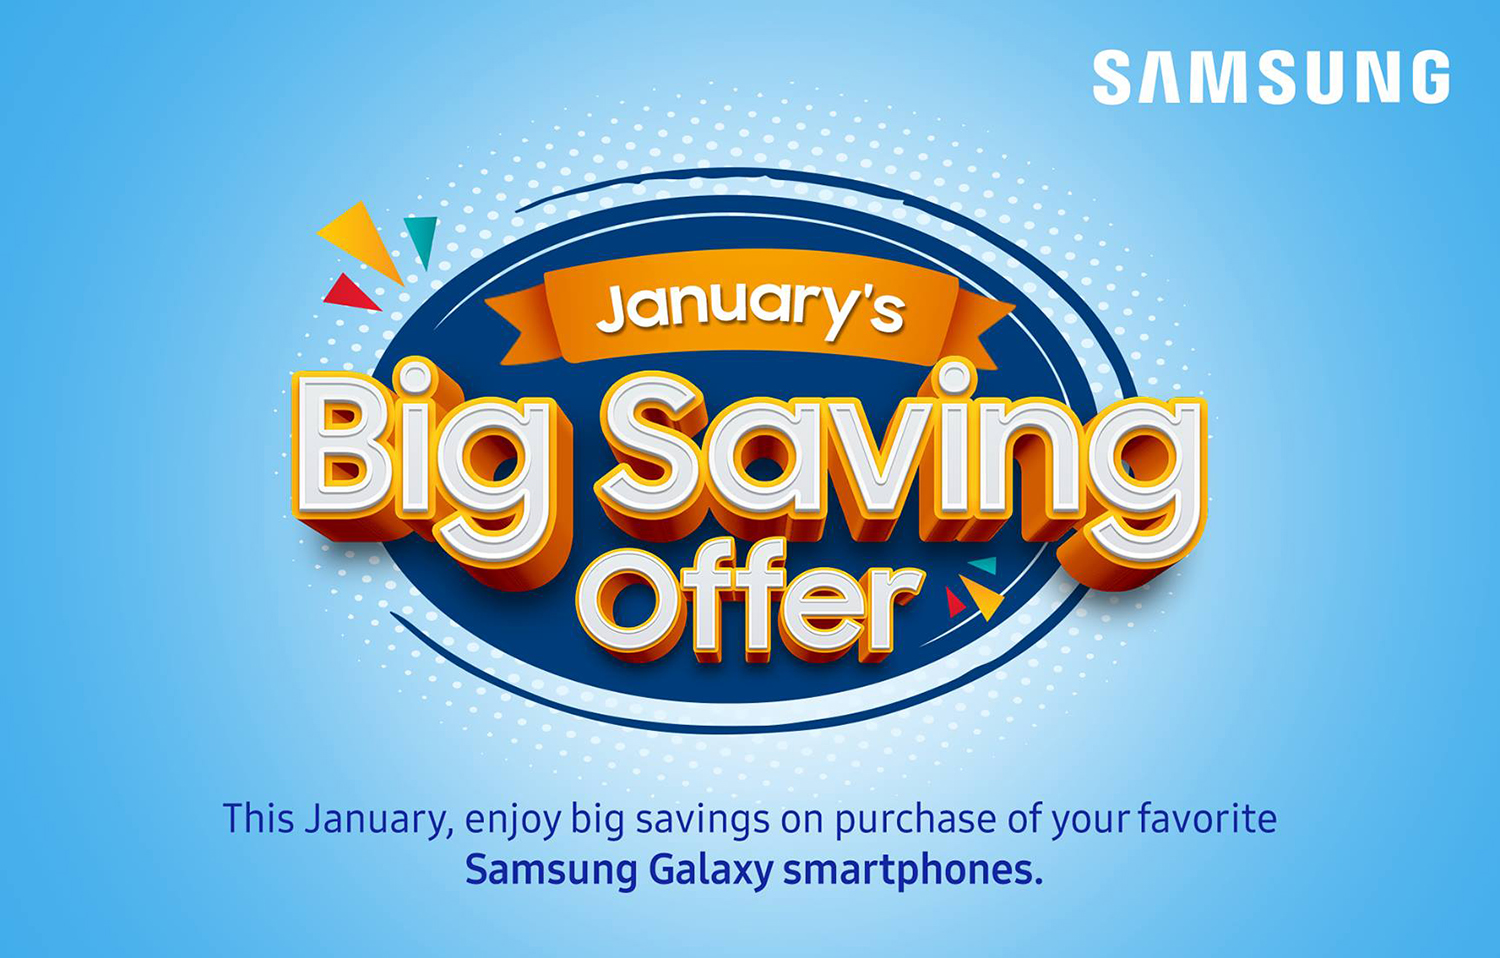 Samsung January's Big Saving Offer